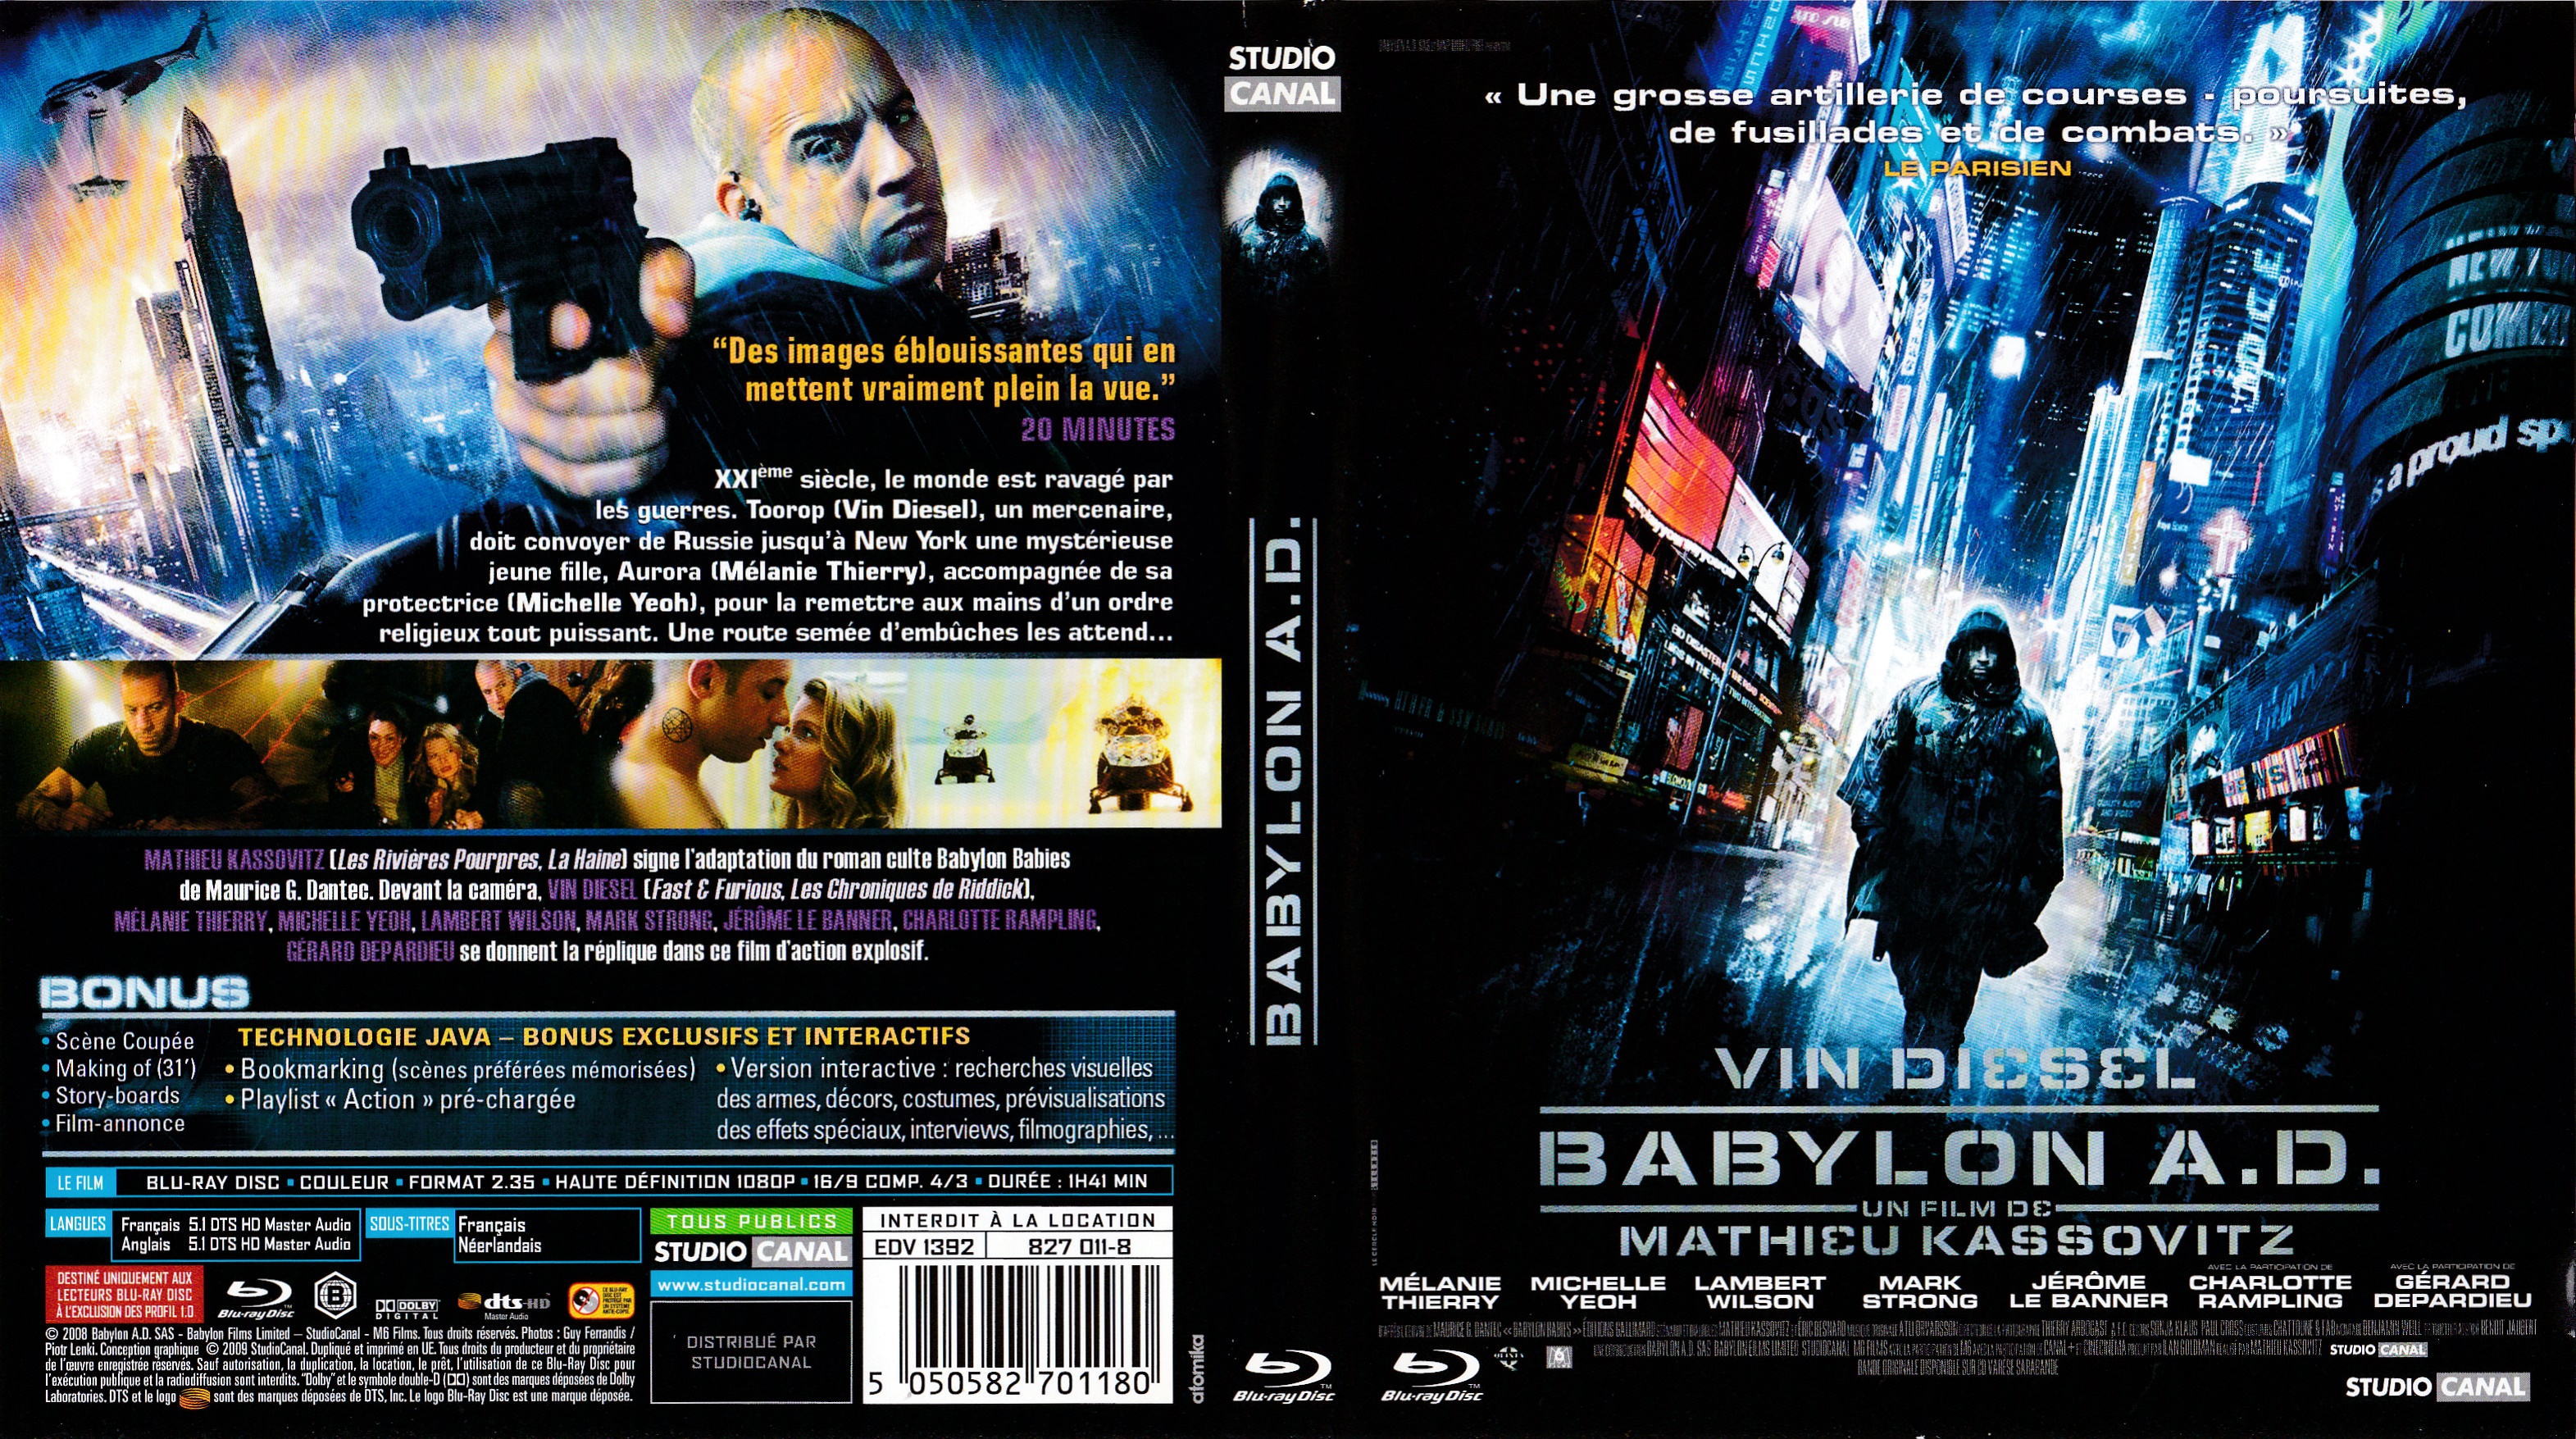 Jaquette DVD Babylon AD (BLU-RAY) v2